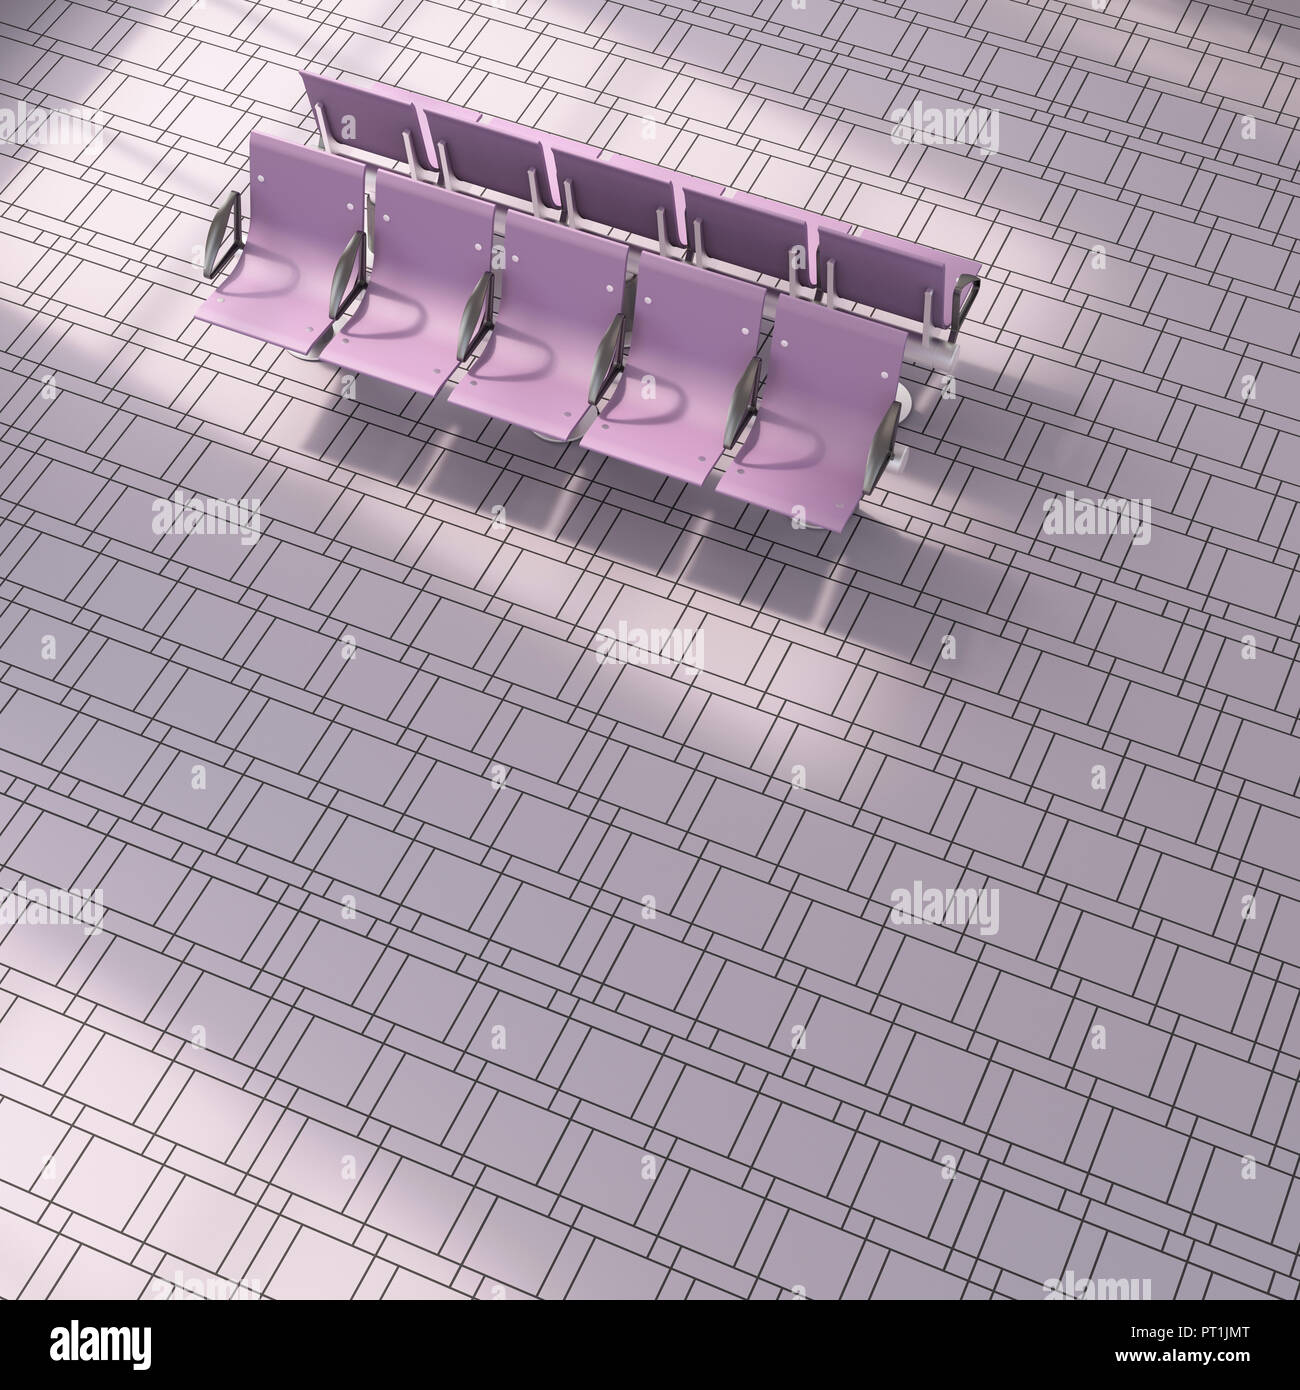 3D rendering, Purple row of seats on tiled floor Stock Photo